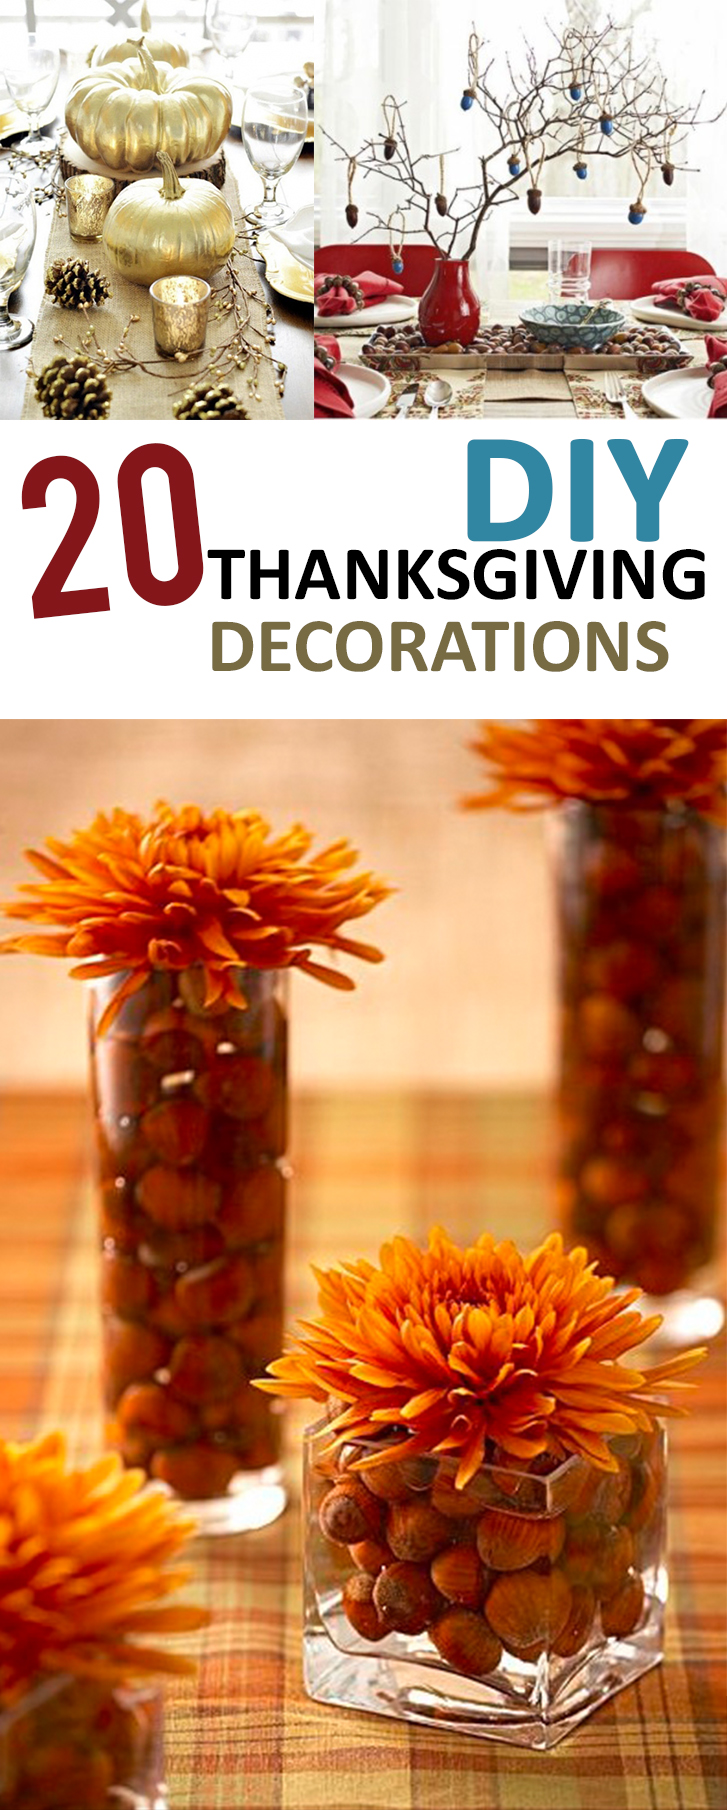 20 DIY Thanksgiving Decorations